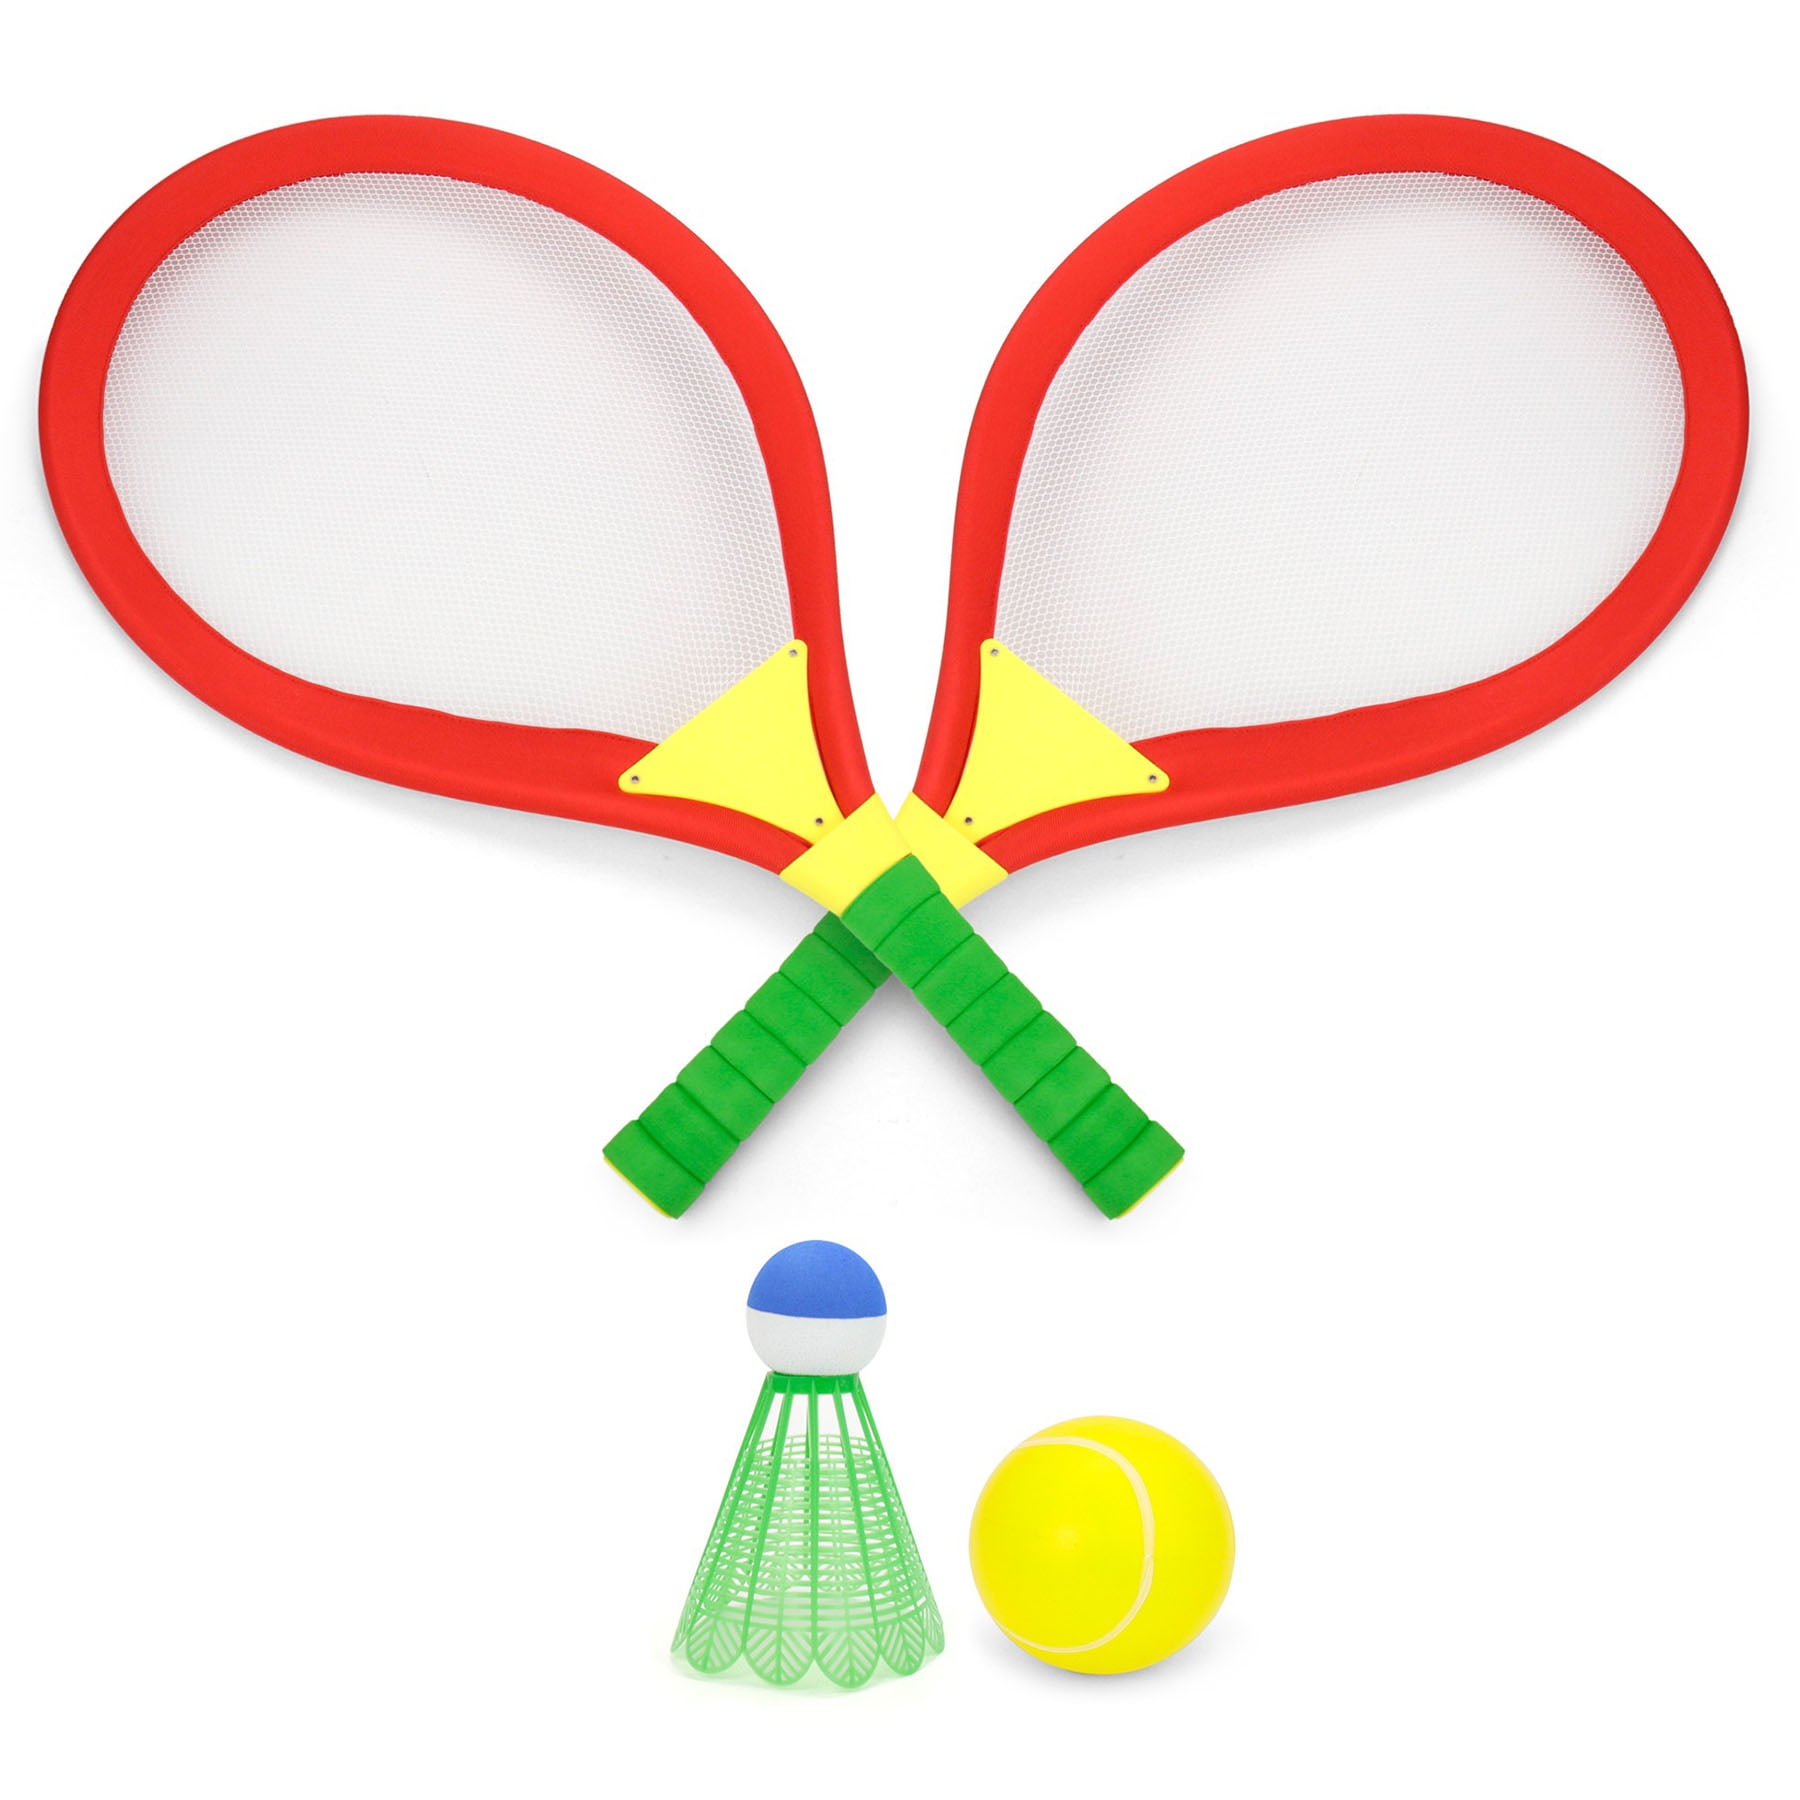 Legler Giant Boomer Badminton Playset Designed for Children Ages 5+ years, Color Varies